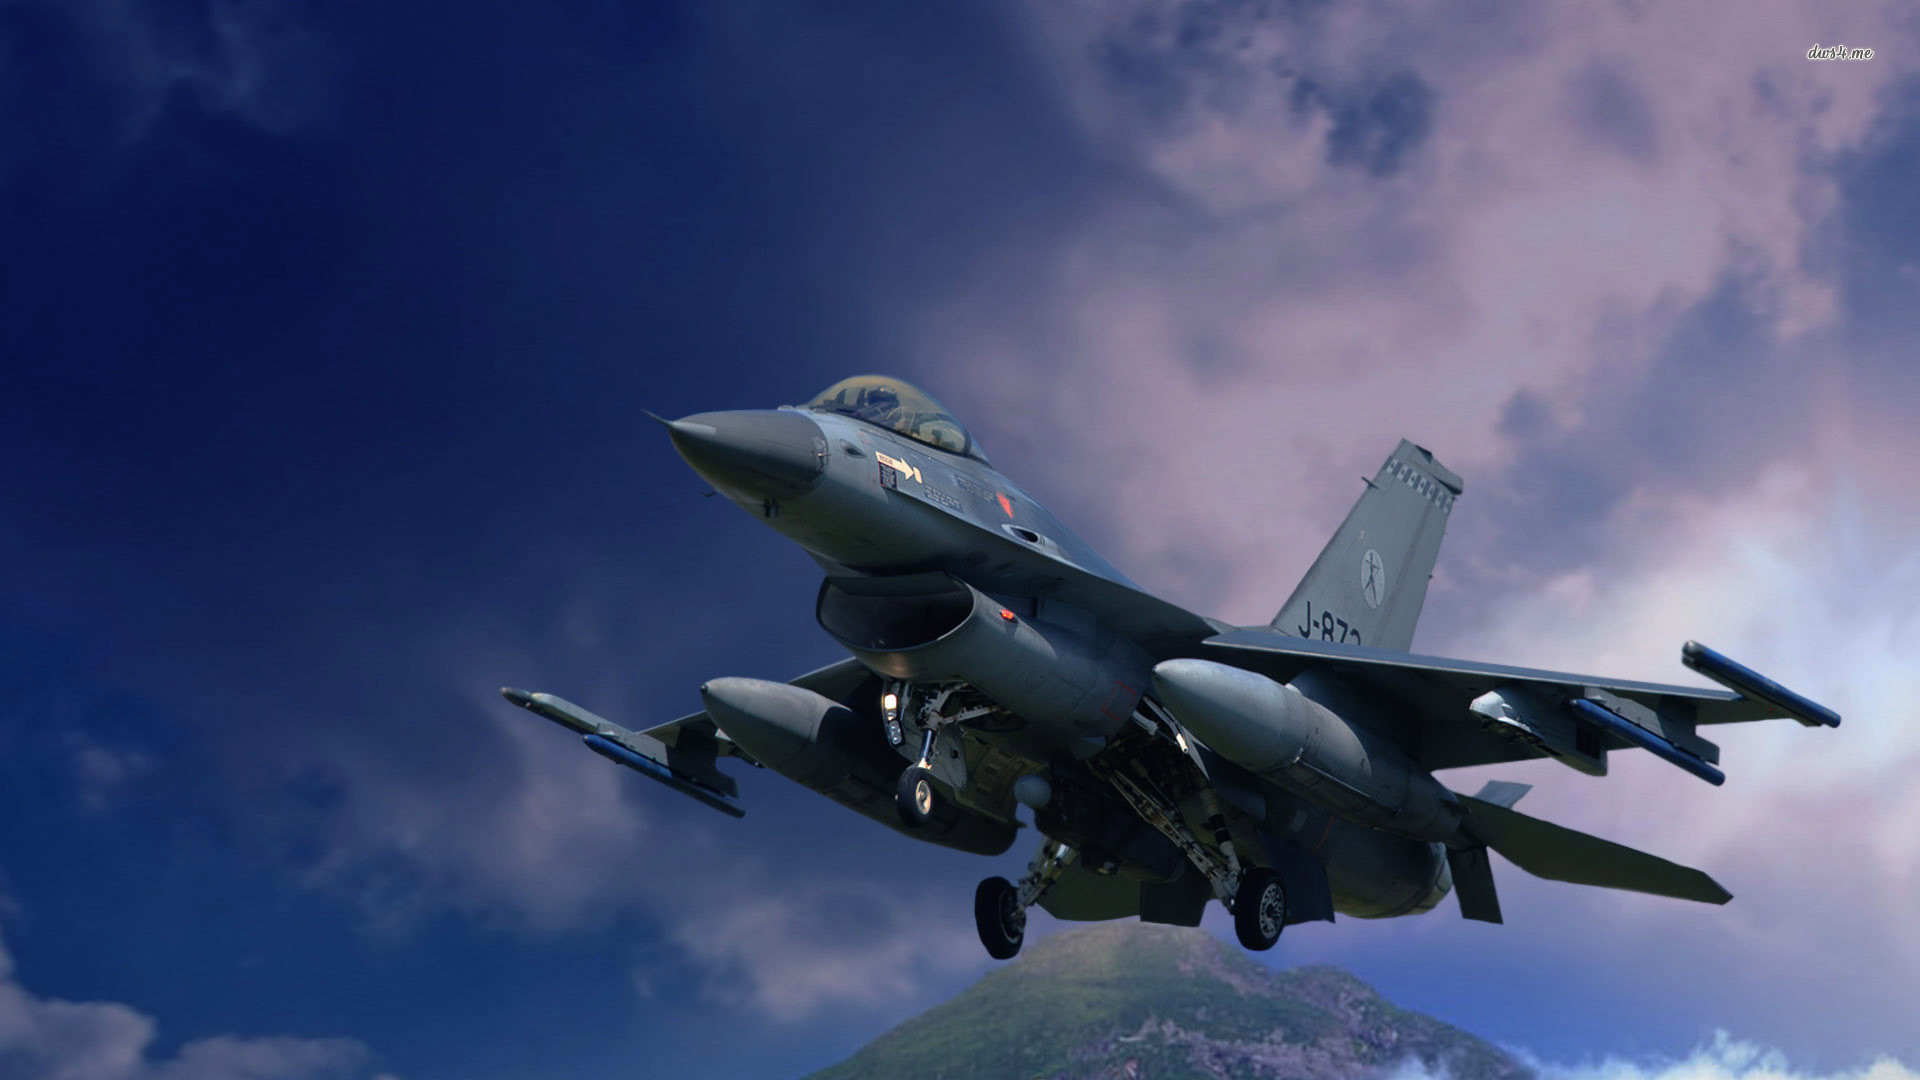 General Dynamics F 16 Fighting Falcon wallpaper – 1198242